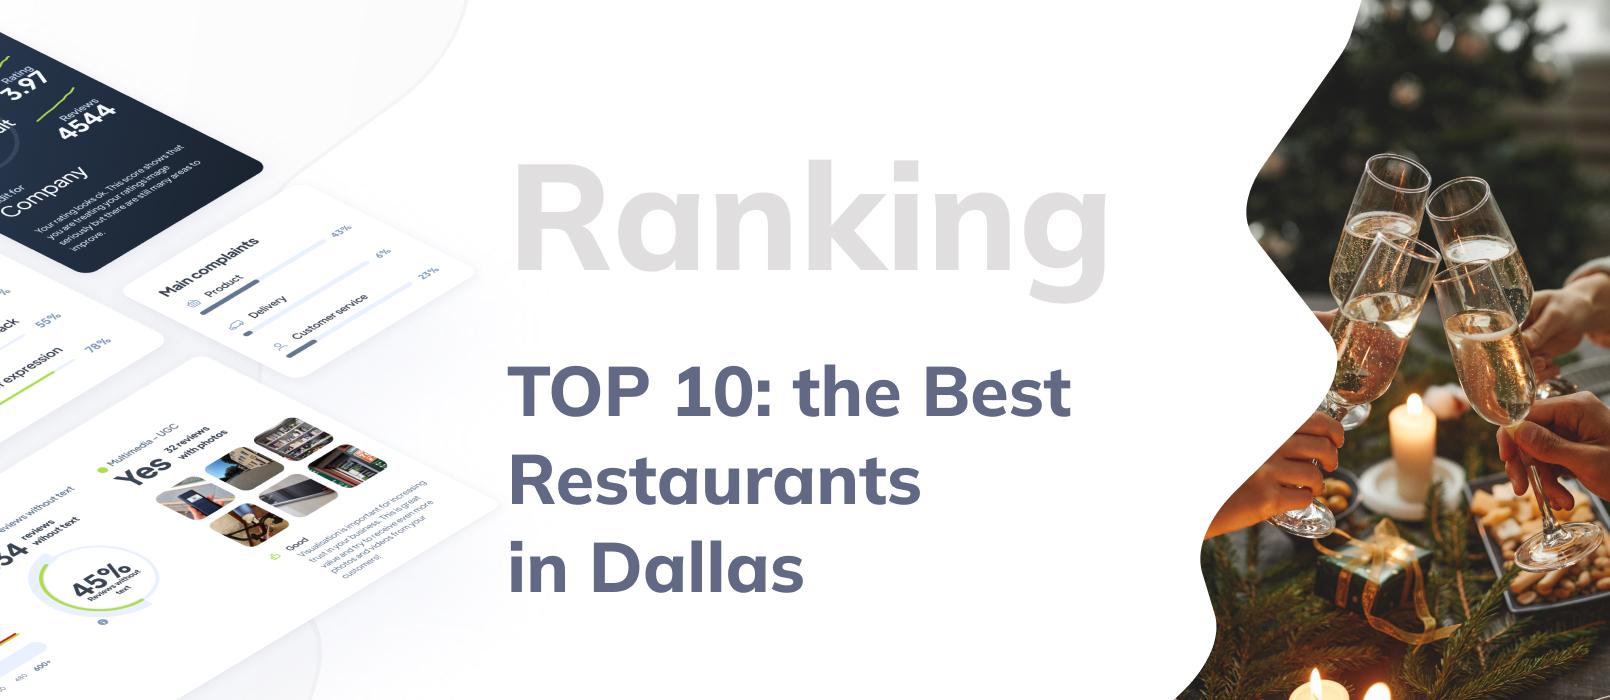 Best Restaurants in Dallas – TOP 10 Ranking